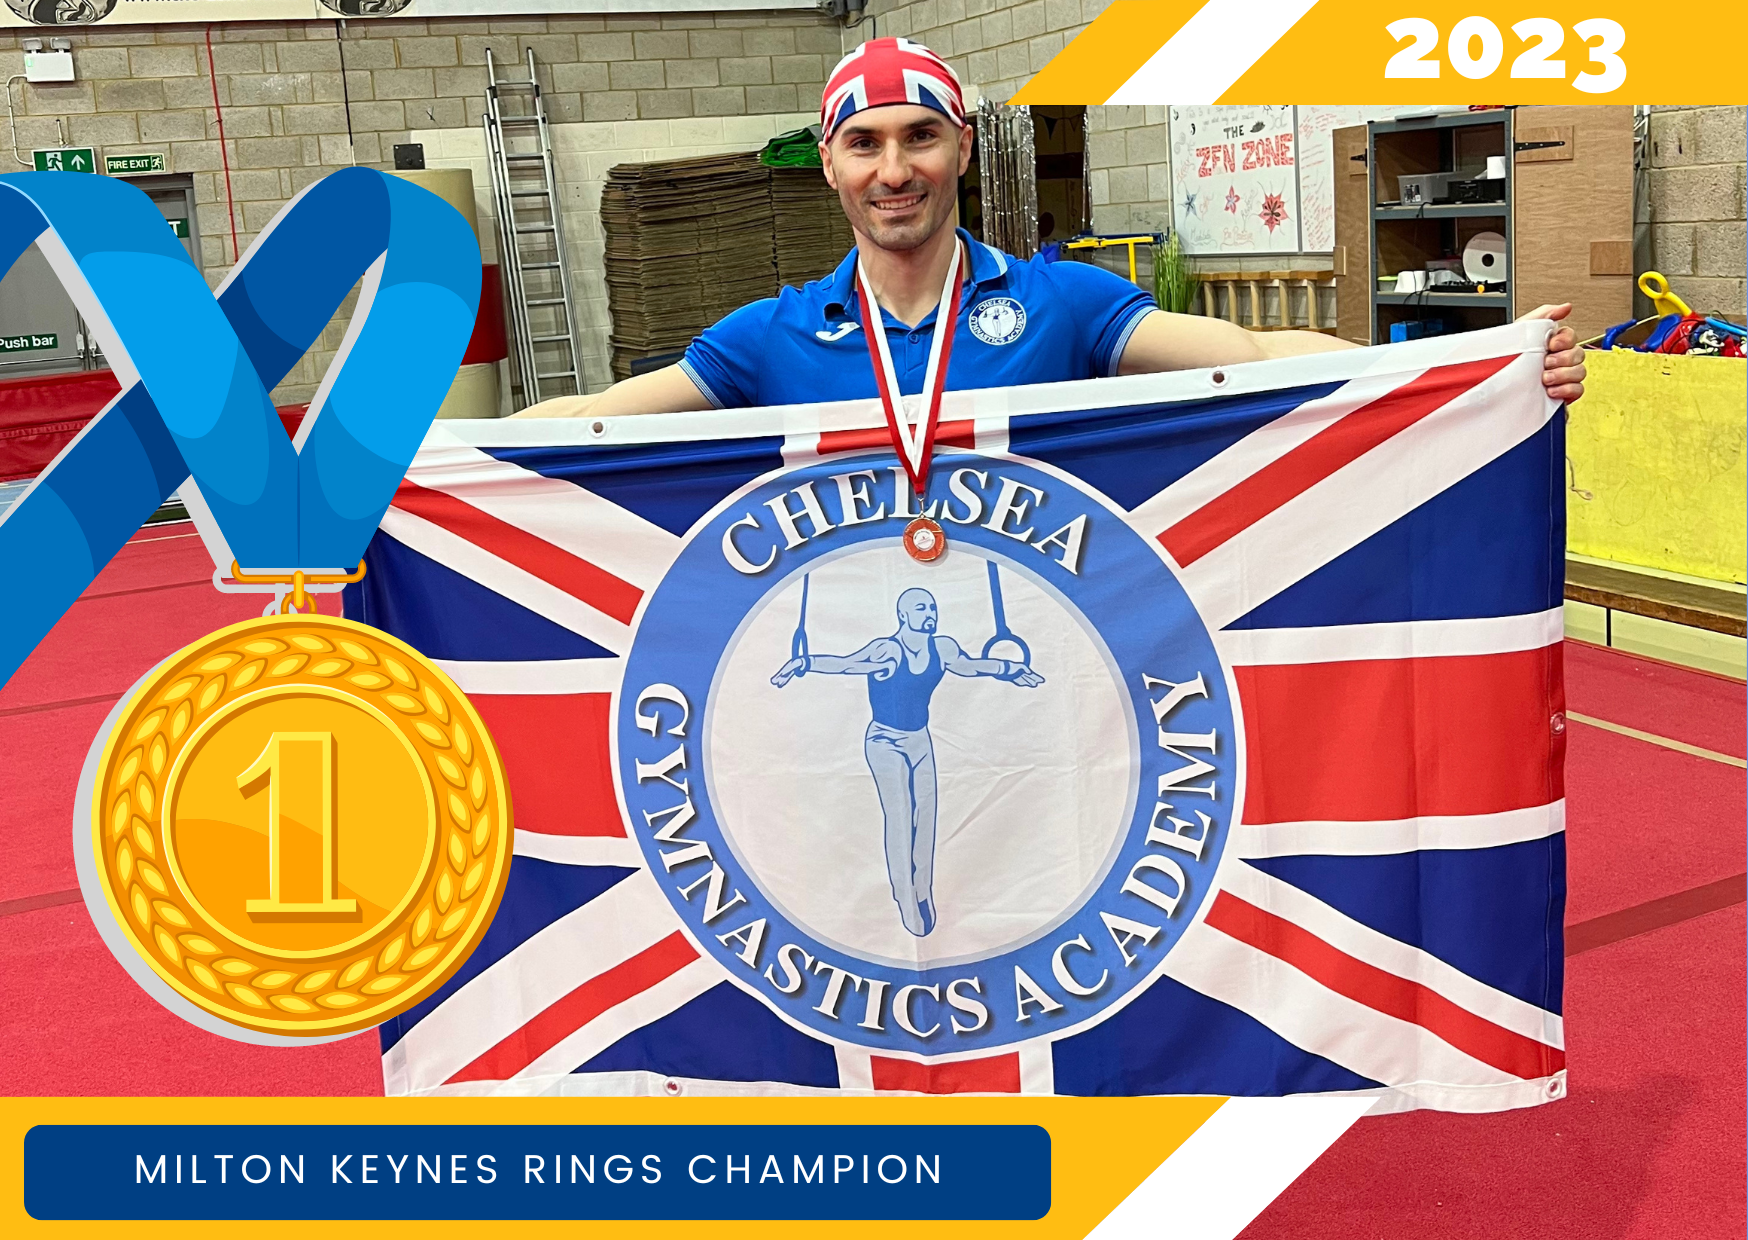 coach Stefan Kolimechkov from Chelsea Gymnastics is the Milton Keynes Rings Champion